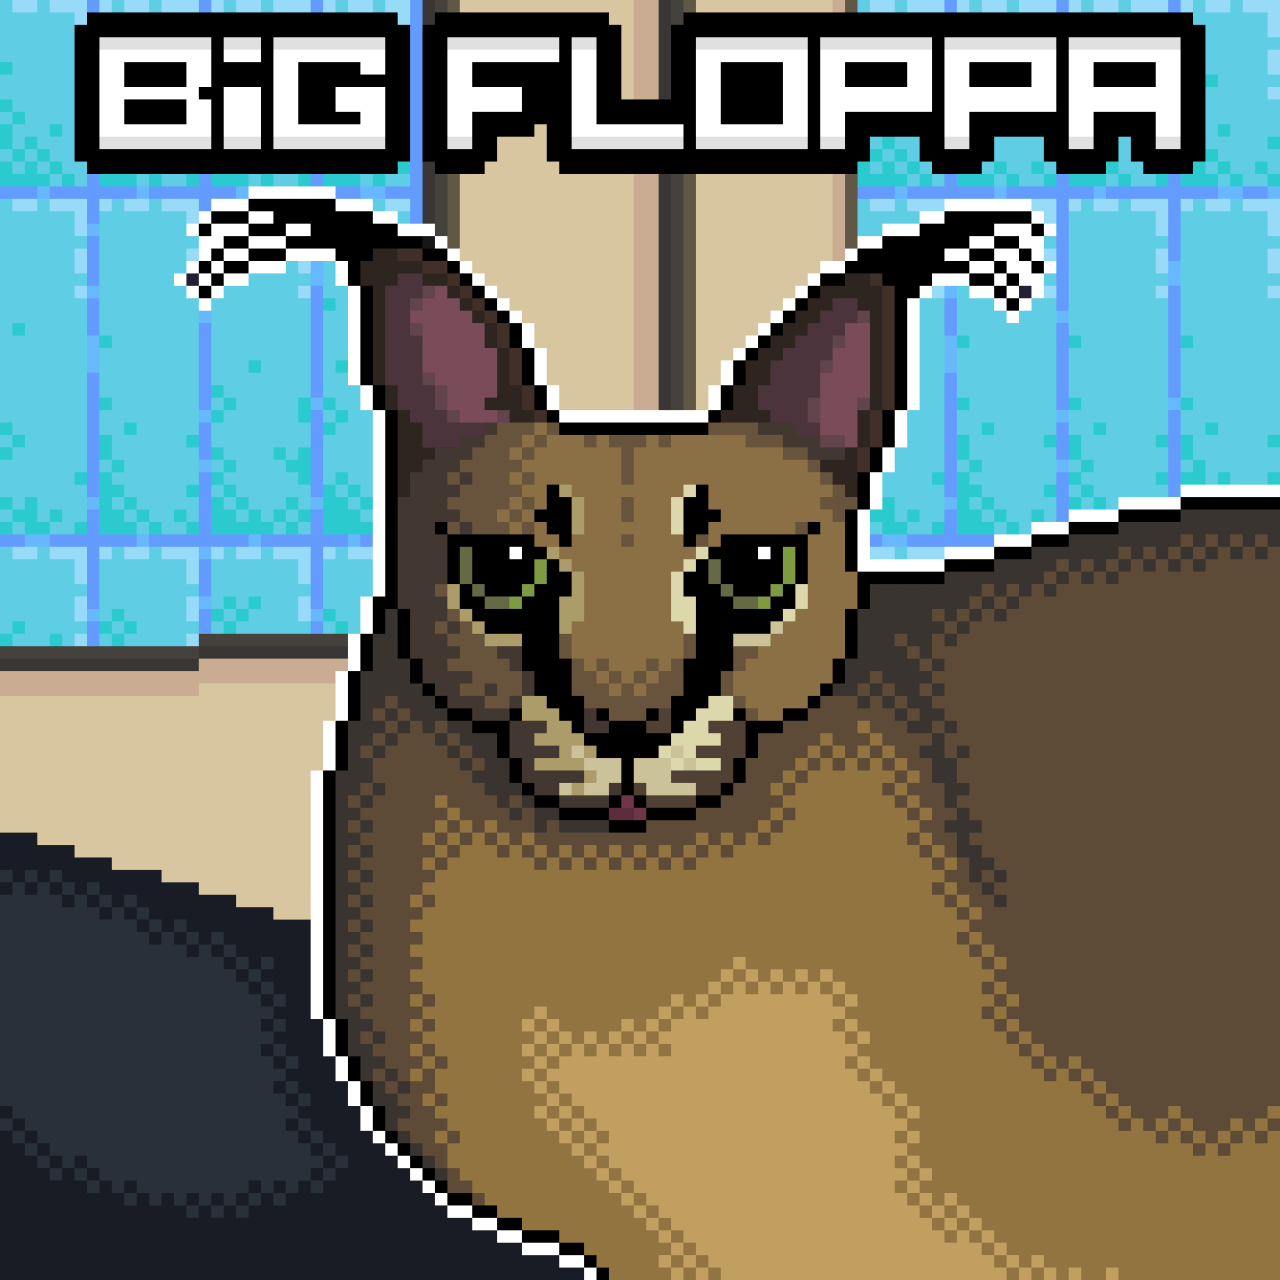 Floppa : R Bigfloppa, HD wallpaper